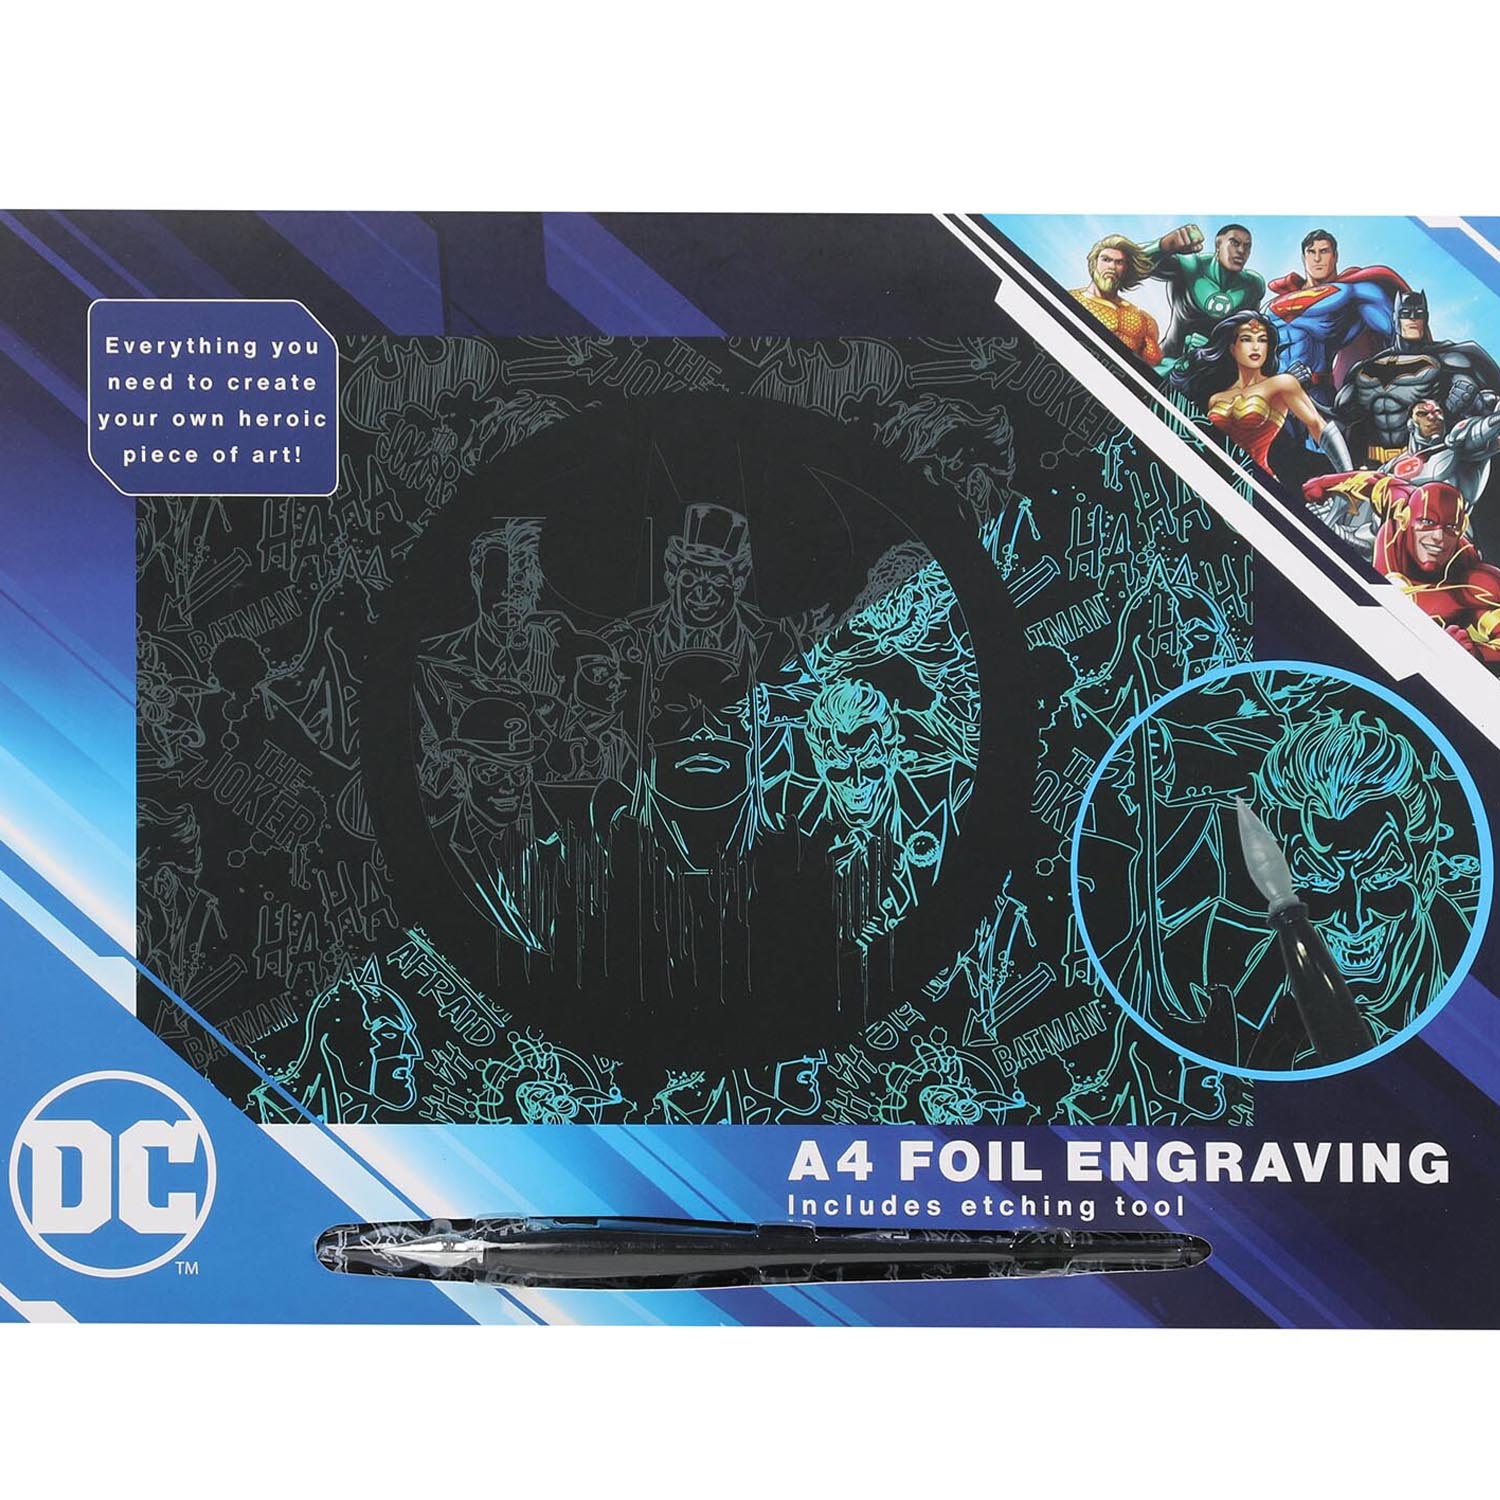 DC Comic Foil Engraving Image 3